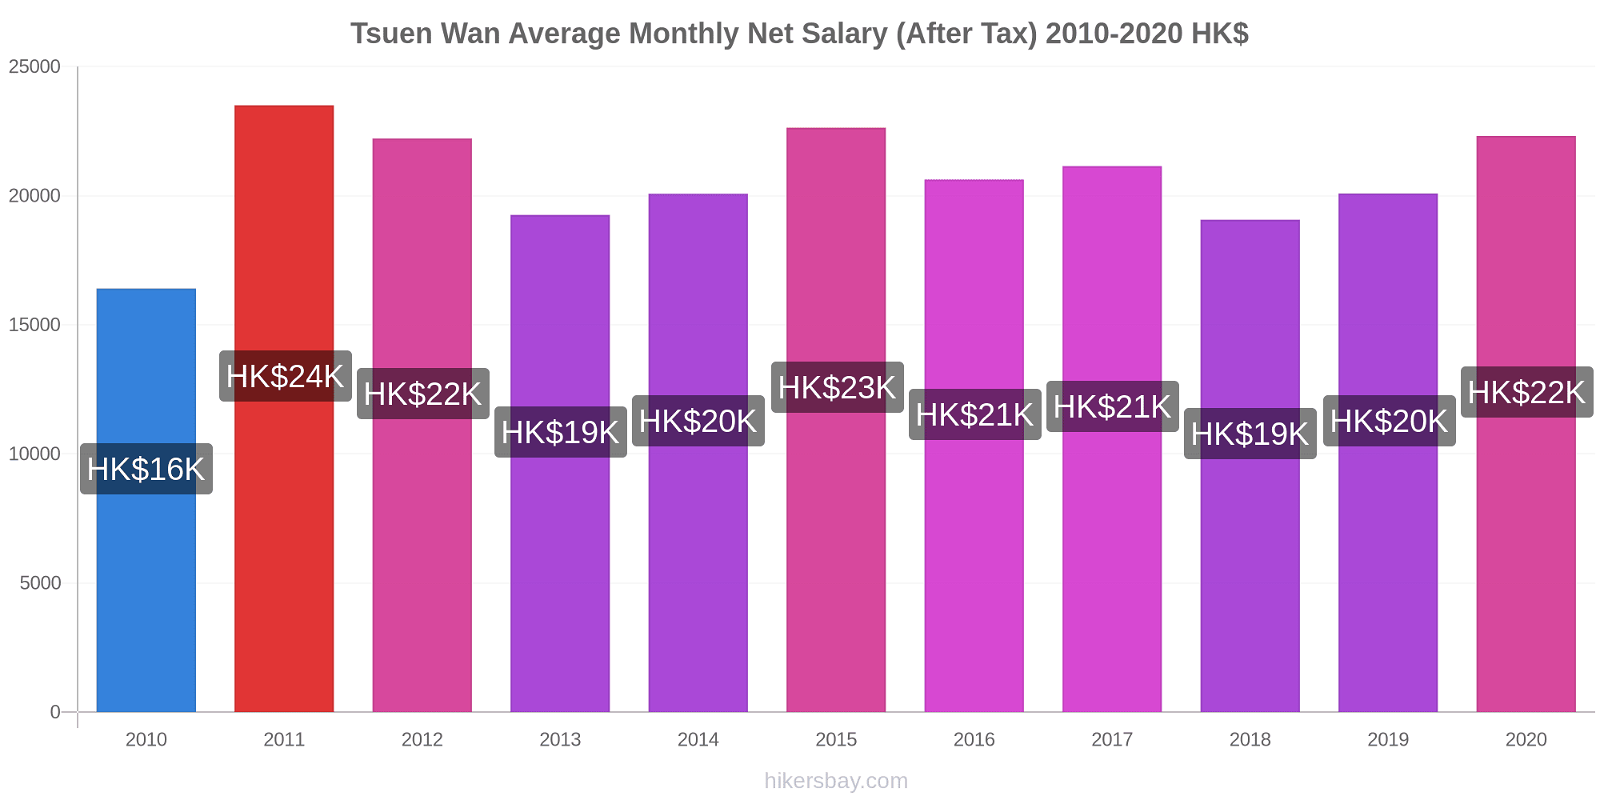 Tsuen Wan price changes Average Monthly Net Salary (After Tax) hikersbay.com